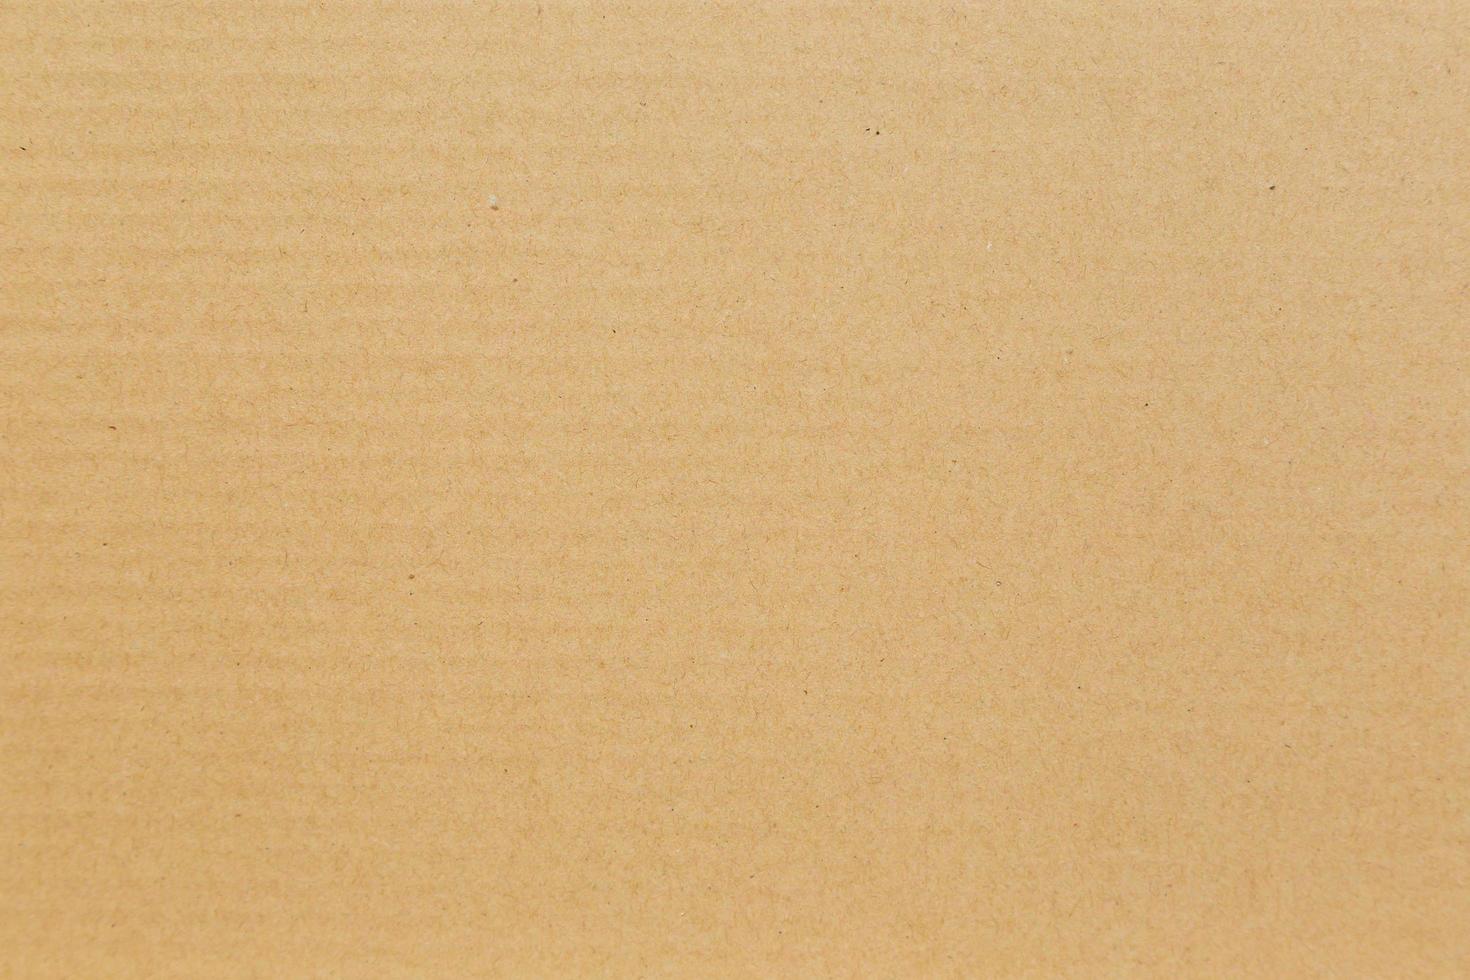 brun kartong papper textur och bakgrund foto